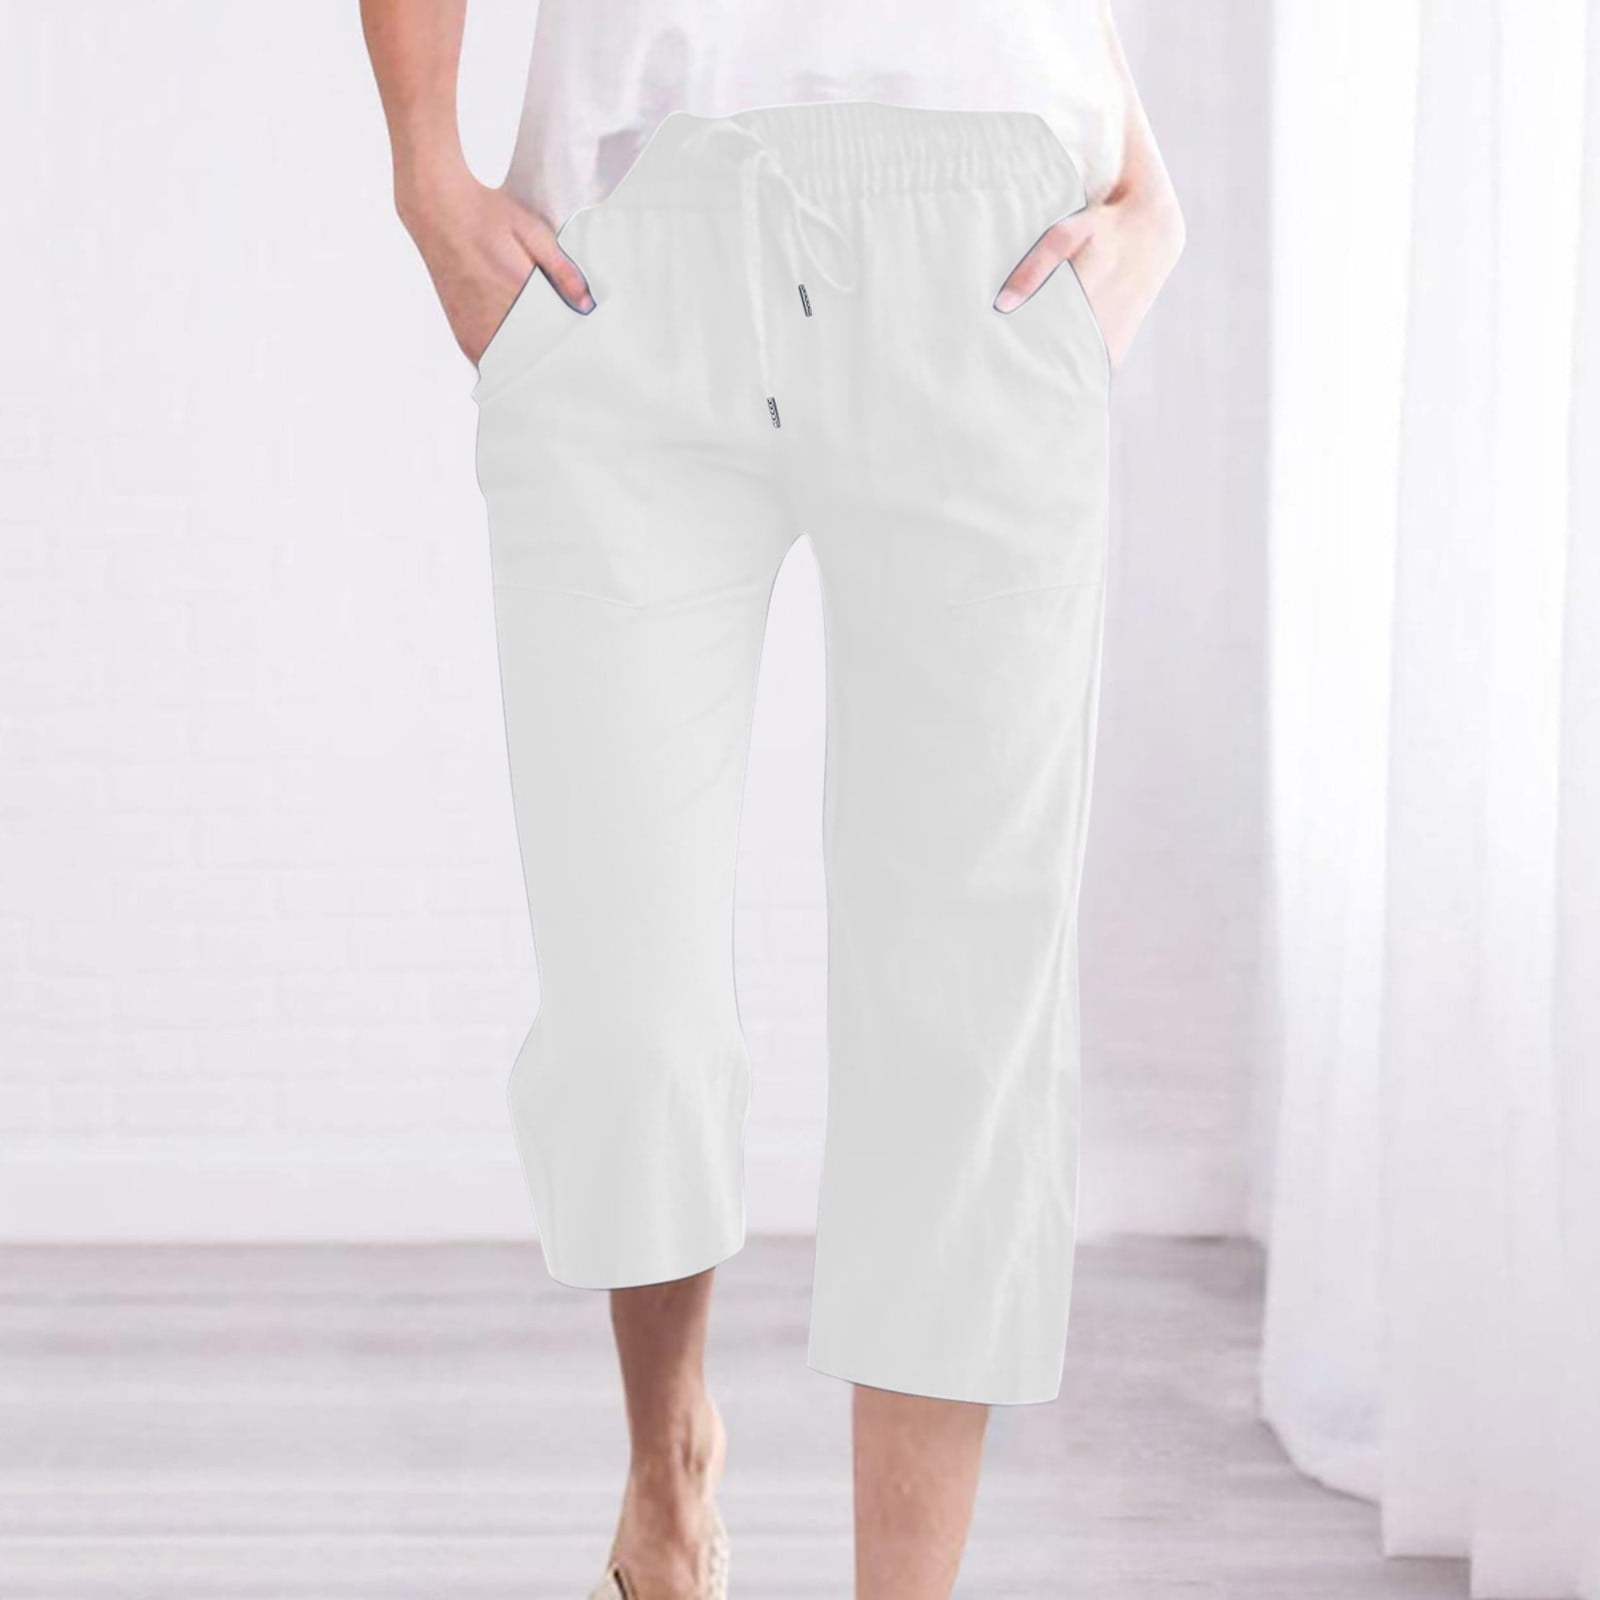 Women's Solid Color Loose Pants Drawstring Elastic Waist Cotton And Linen  Capri-Pants 